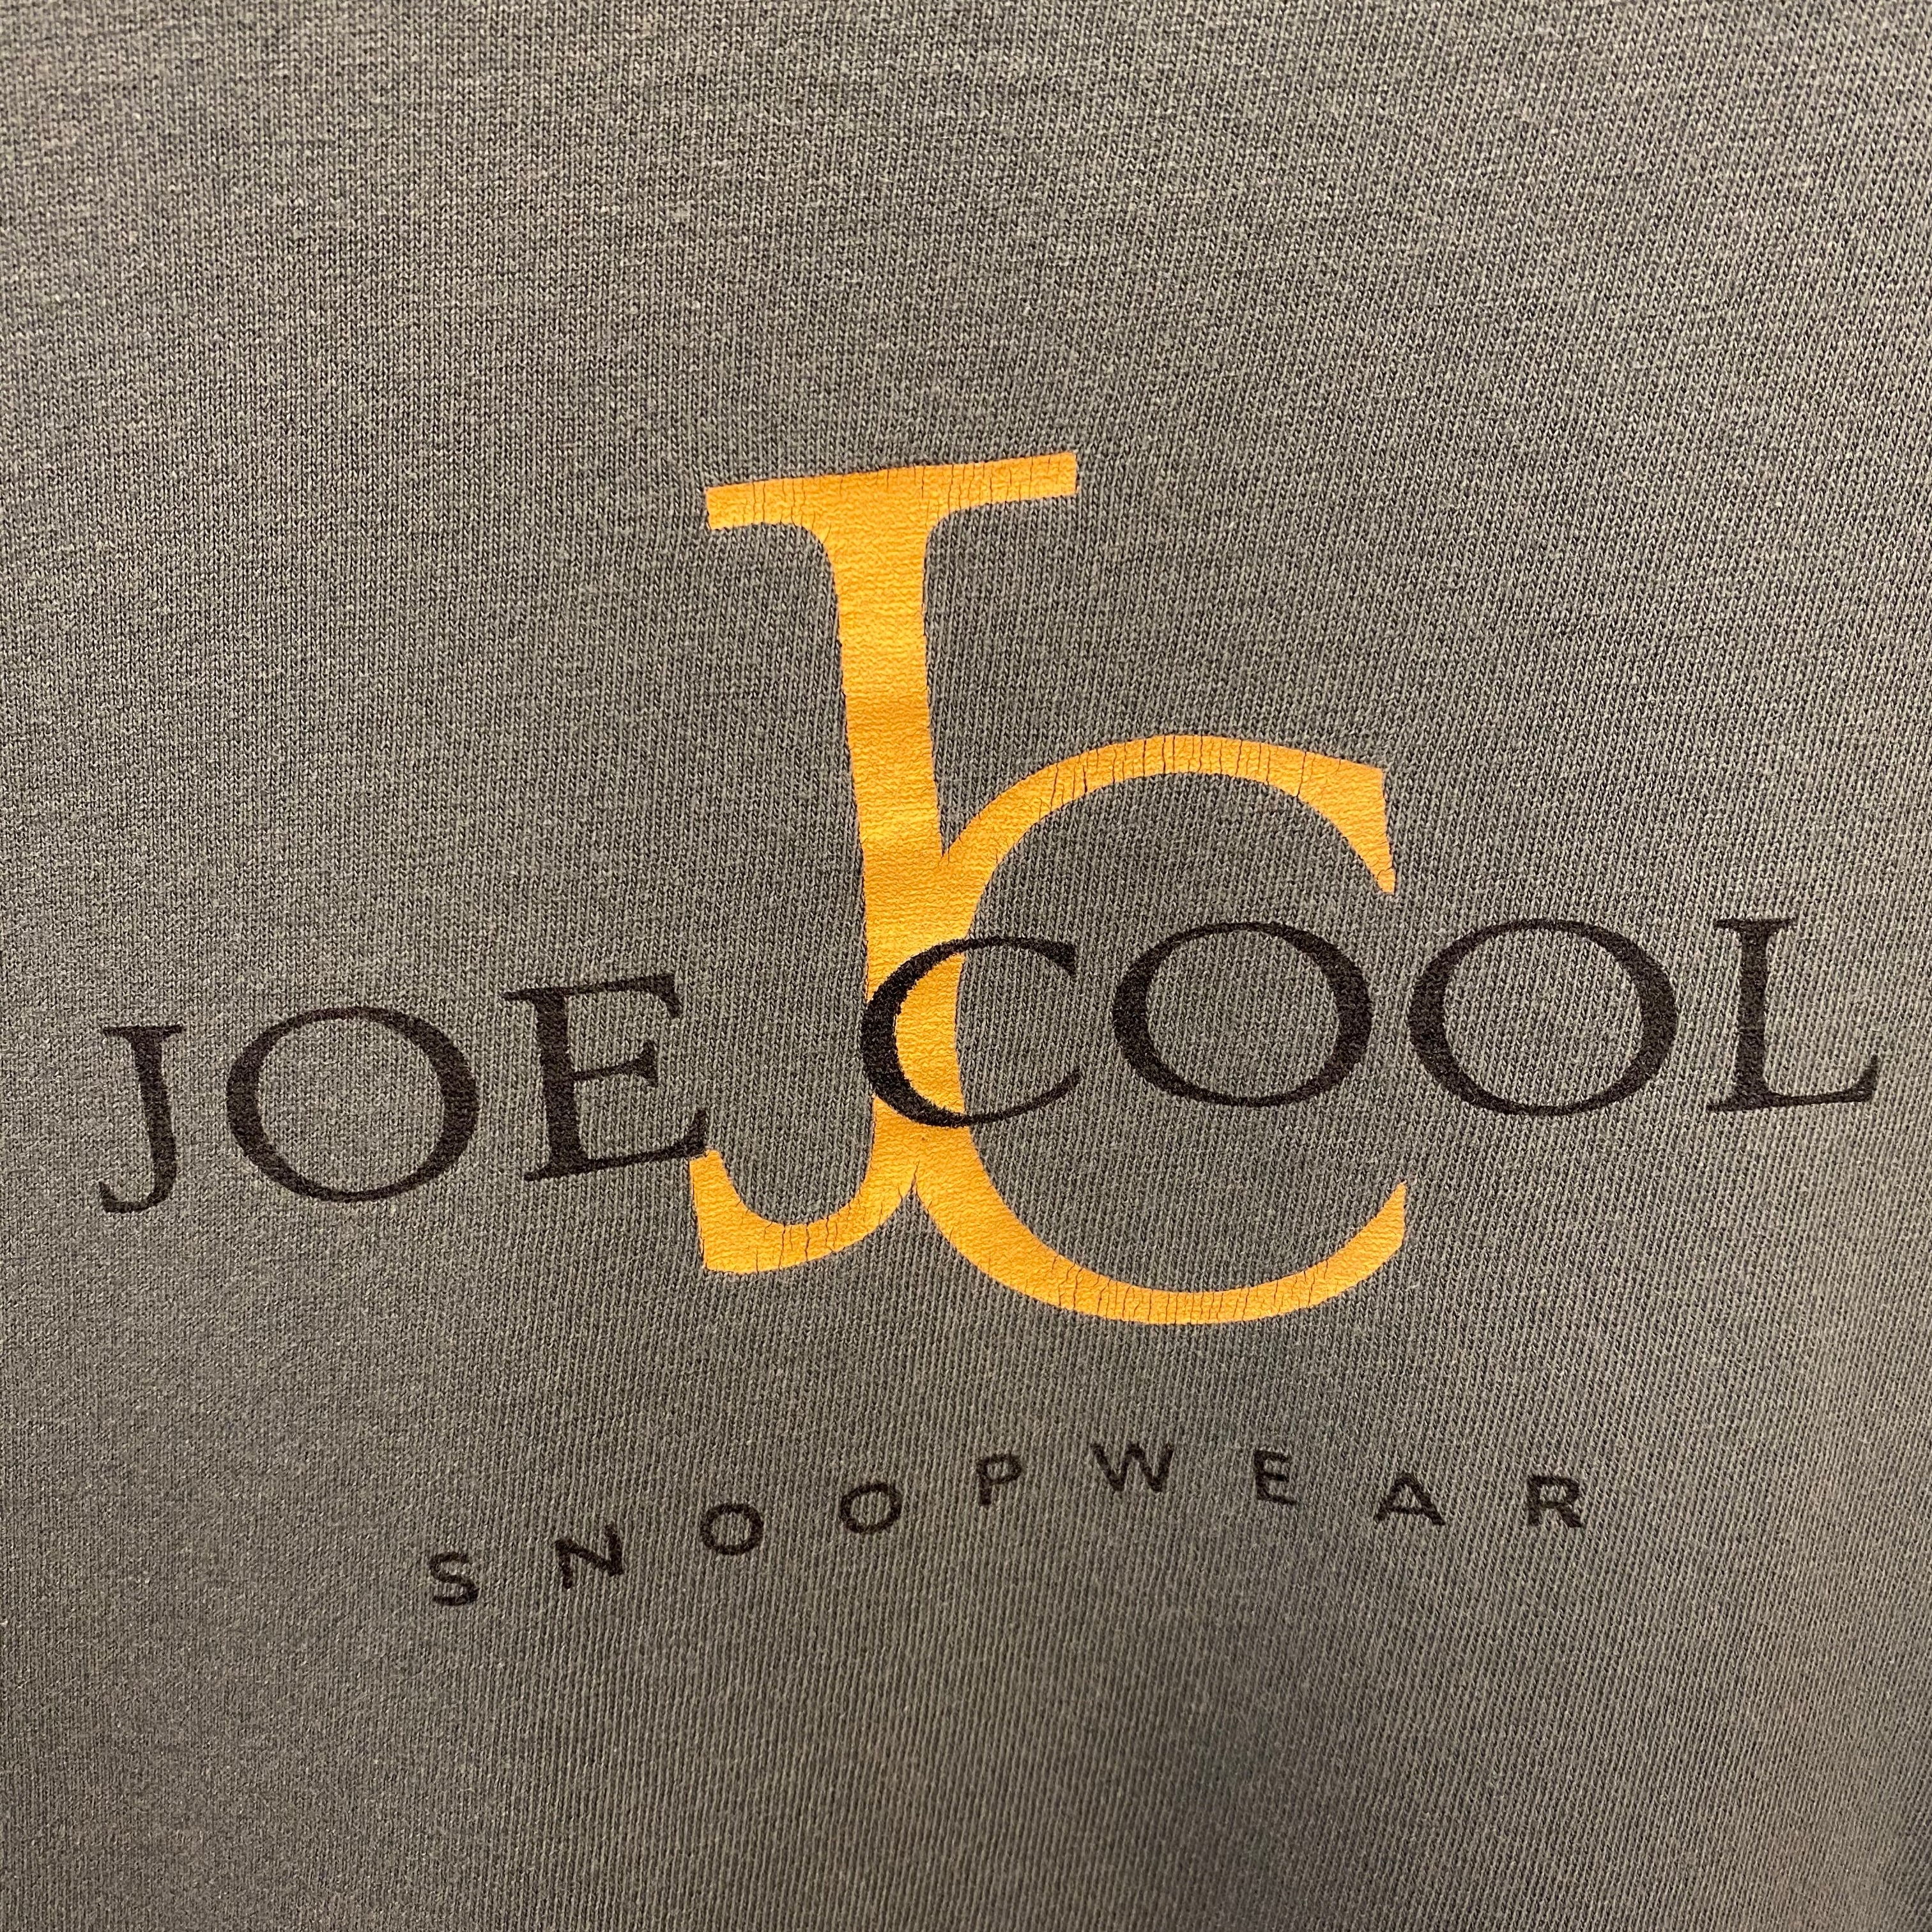 90’s vintage JOE COOL SNOOPWEAR スウェット